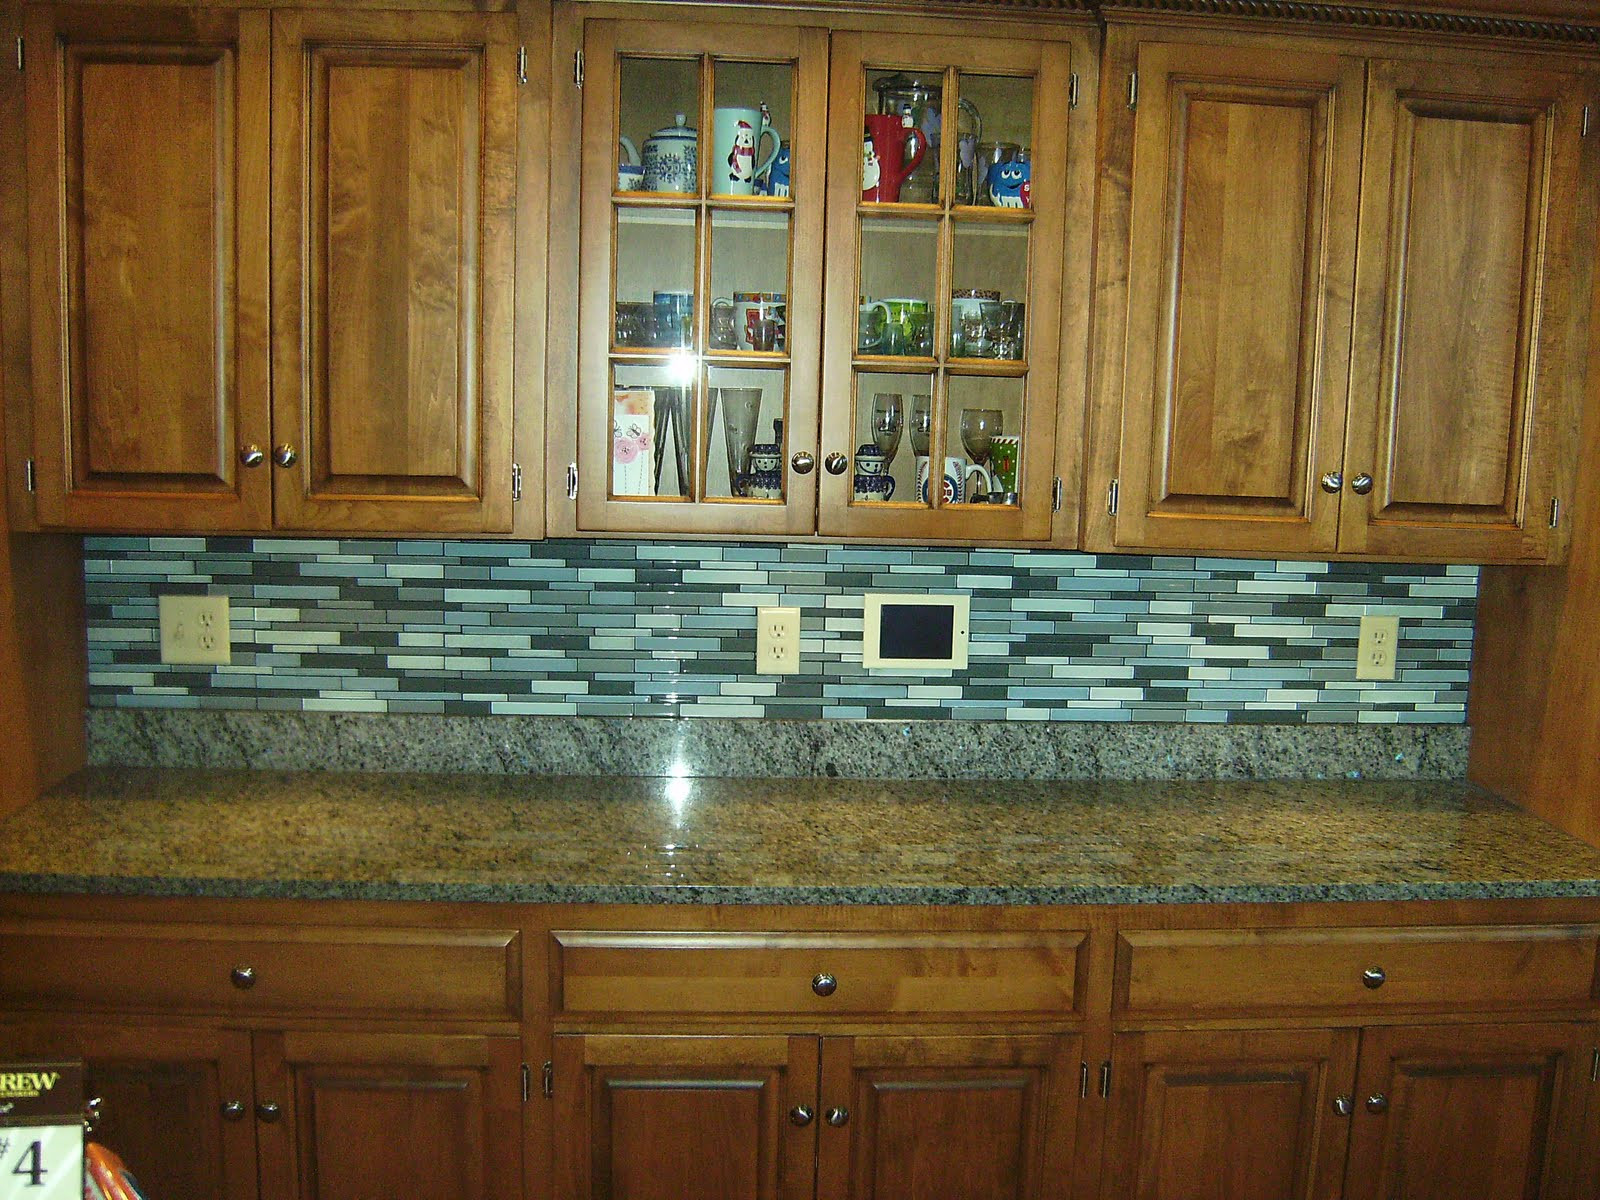 Kitchen Backsplash Glass Tile
 Knapp Tile and Flooring Inc Glass Tile Backsplash